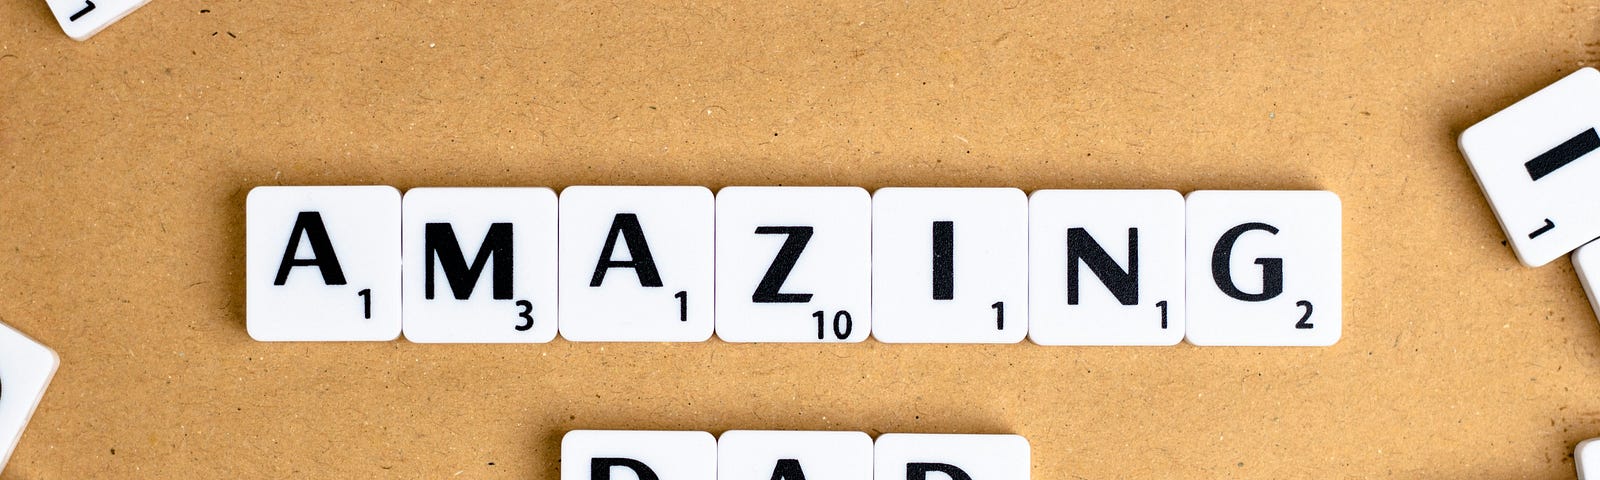 Scrabble tiles that spell “amazing dad.”